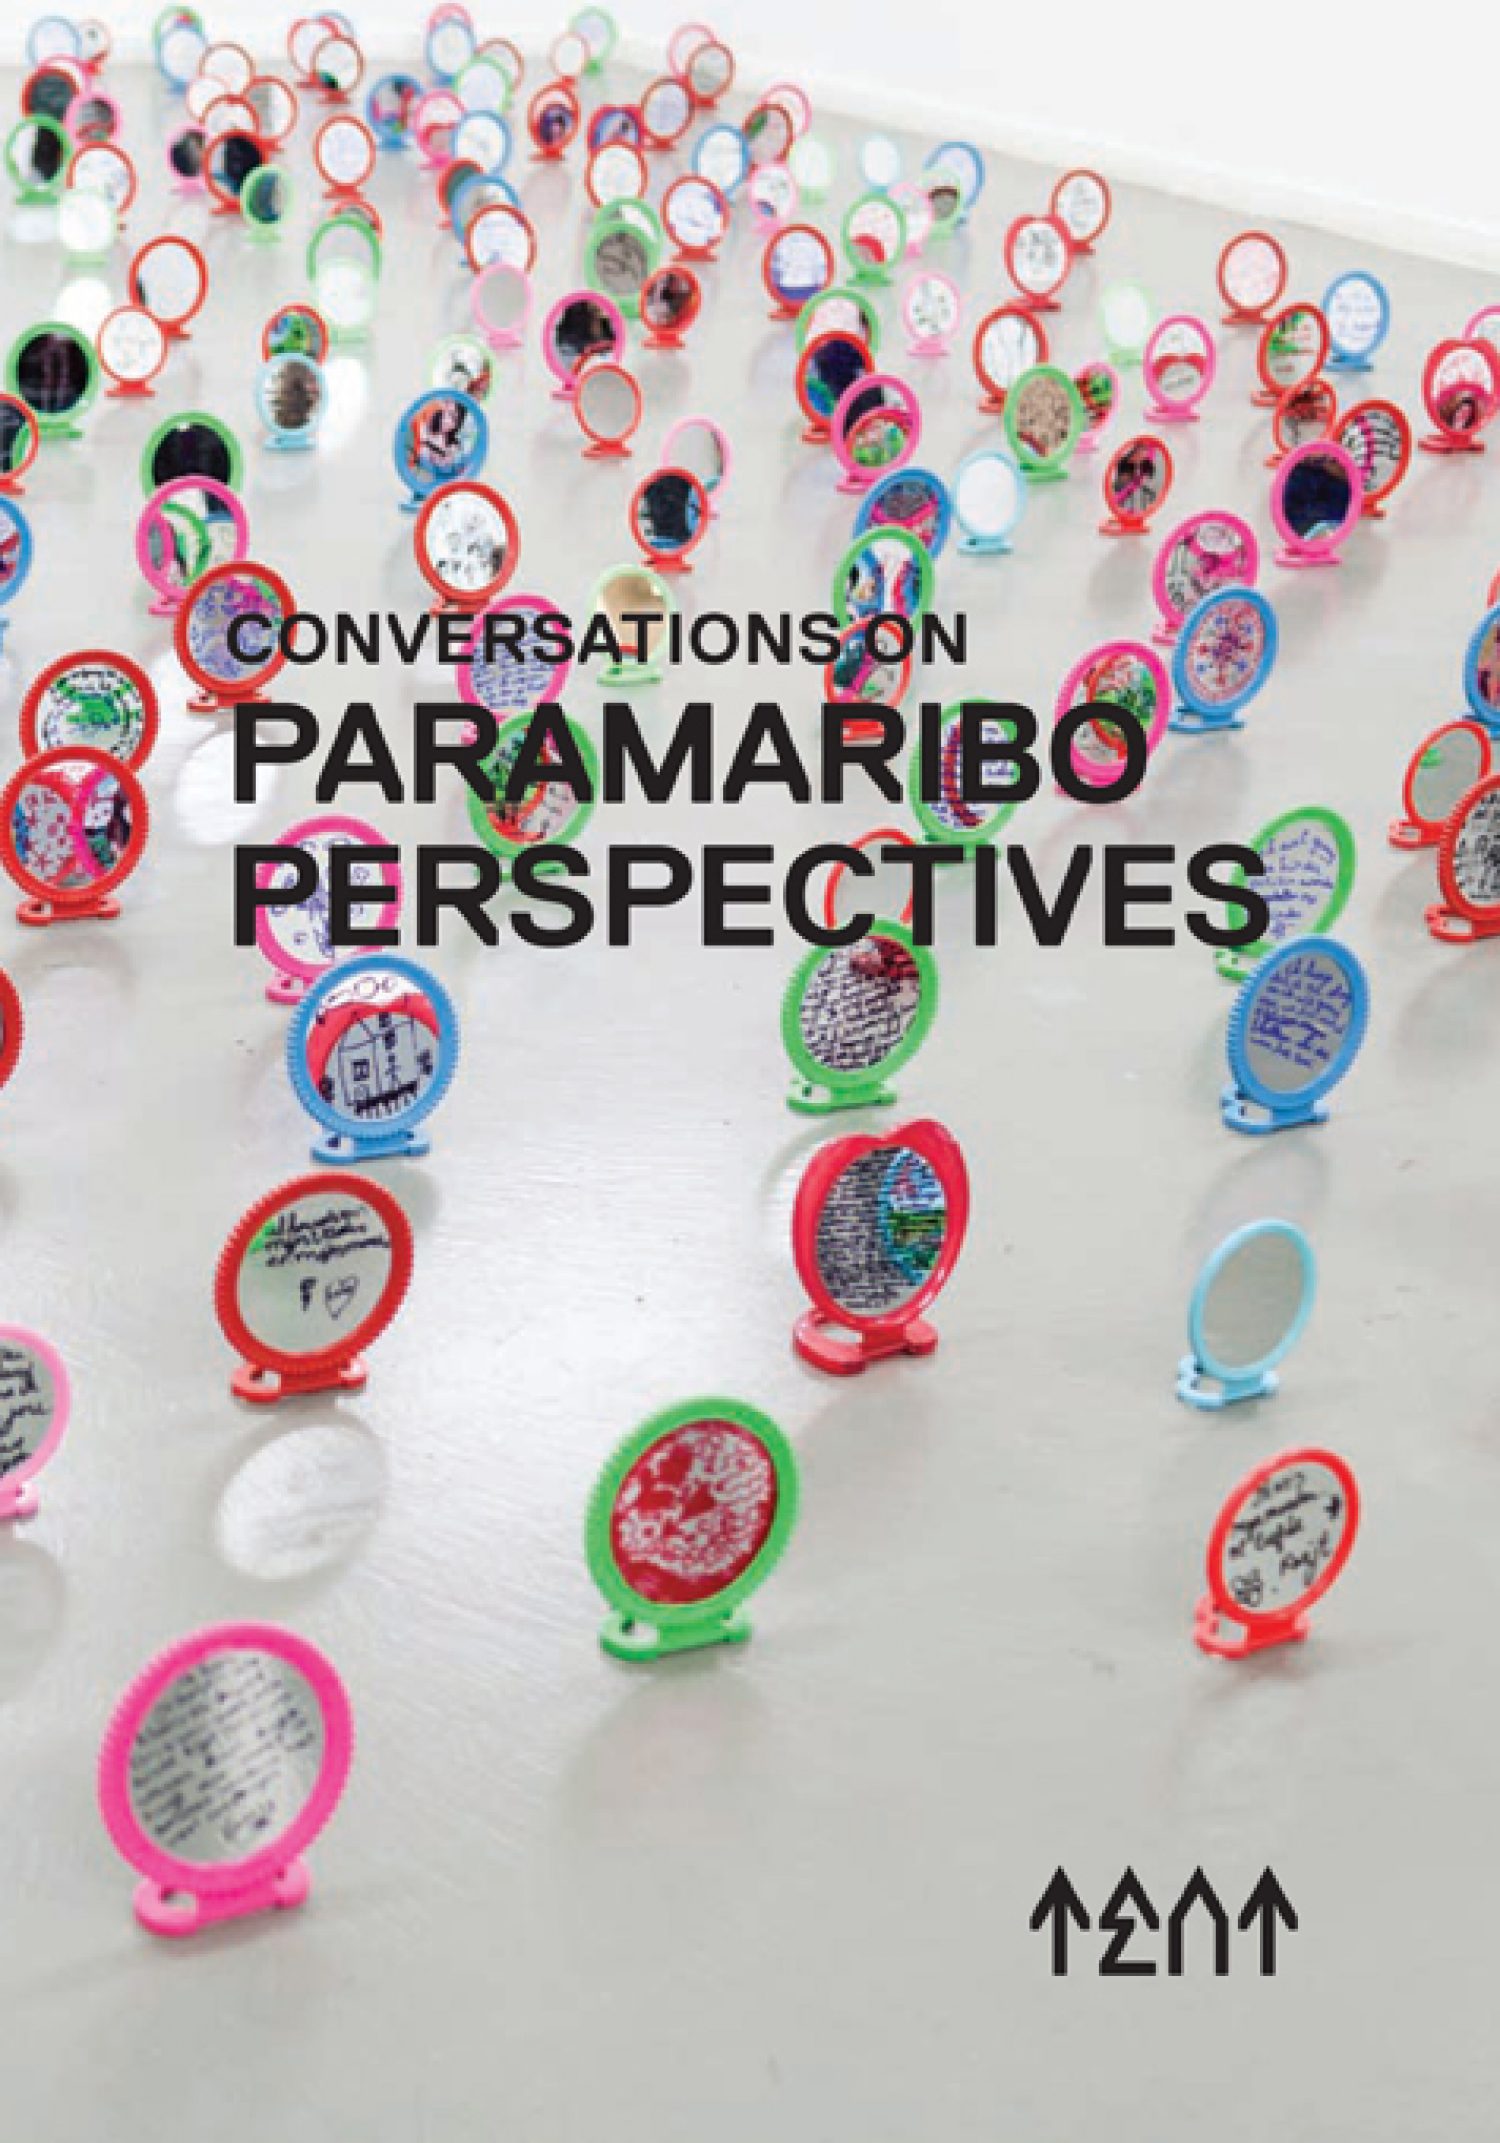 Net verschenen: Conversations on Paramaribo Perspectives